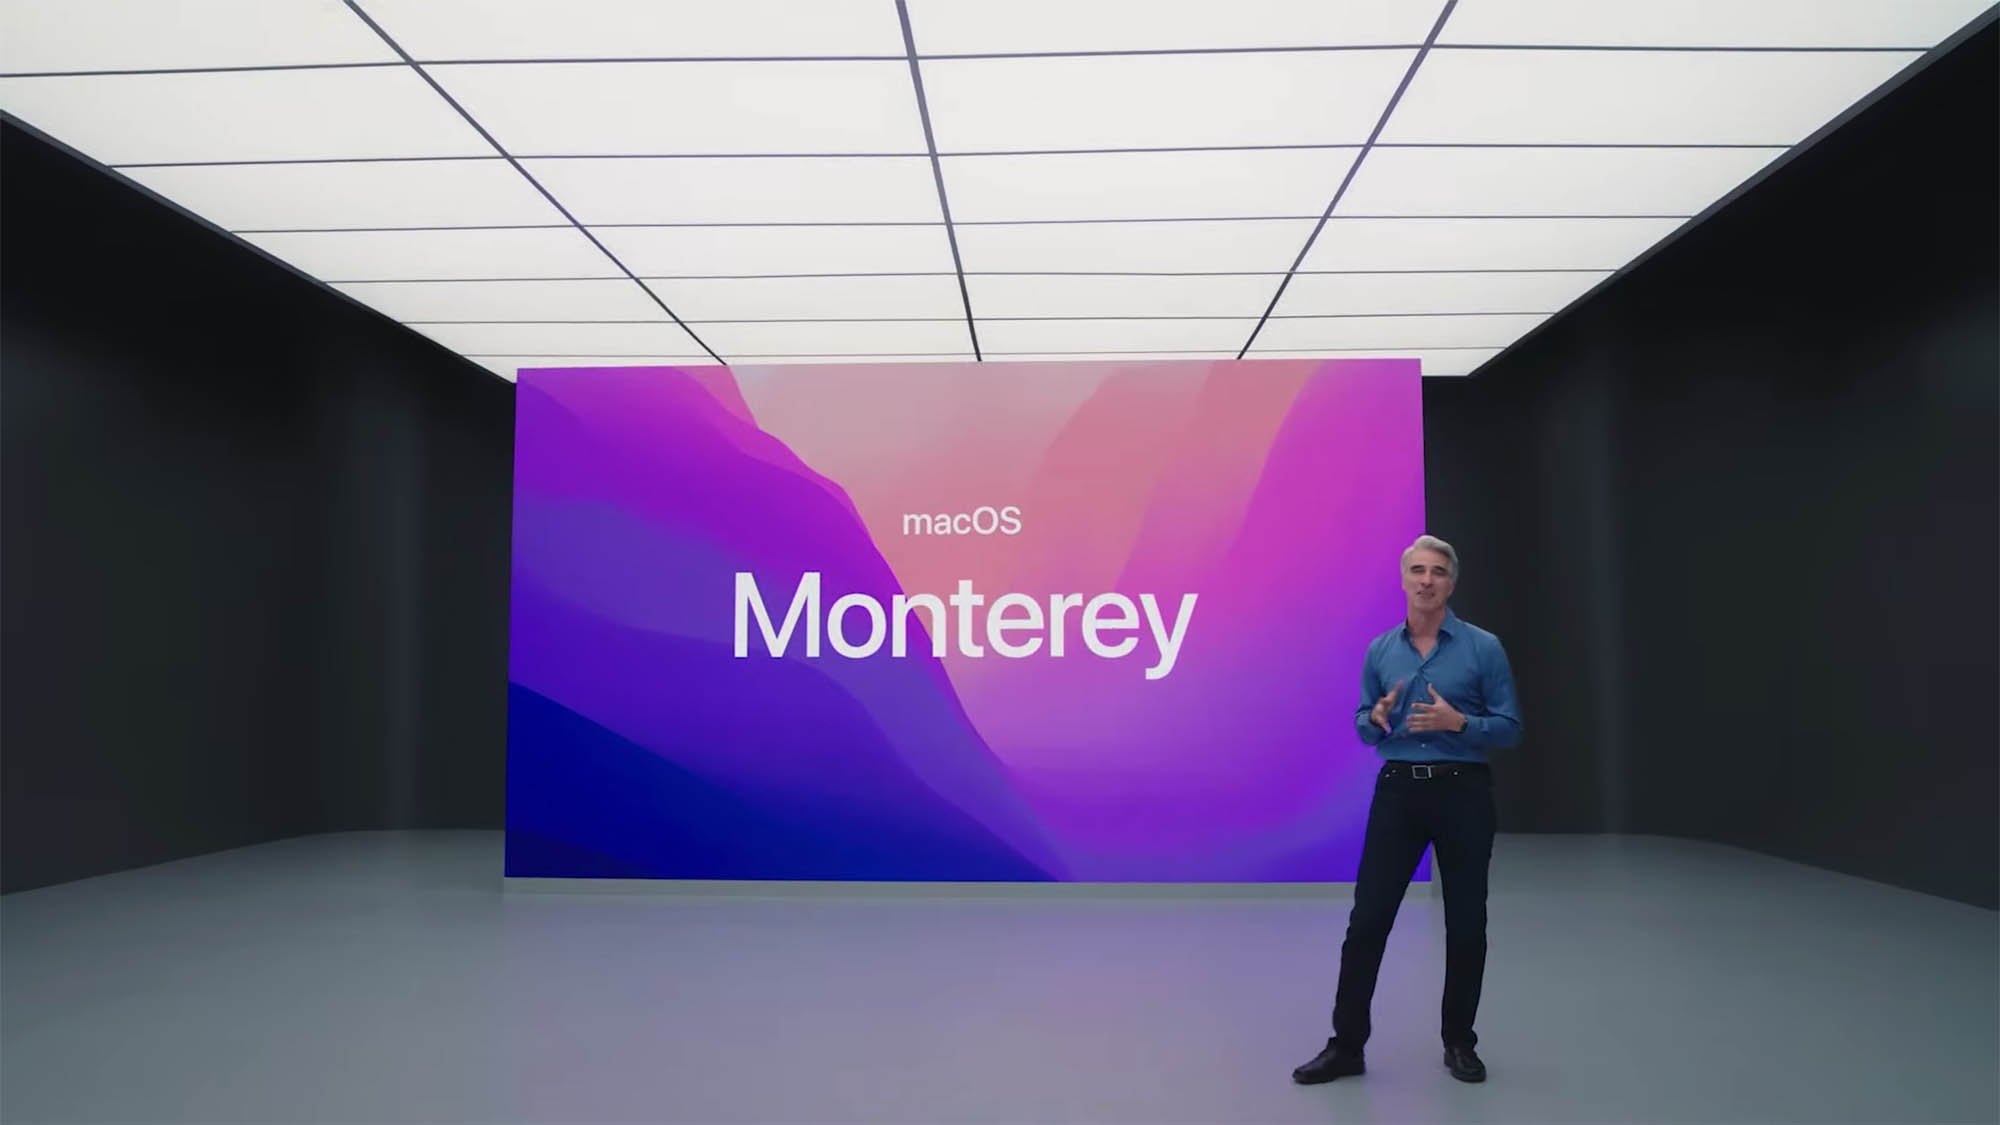 Apple’s MacOS Monterey brings the next big update for Macs